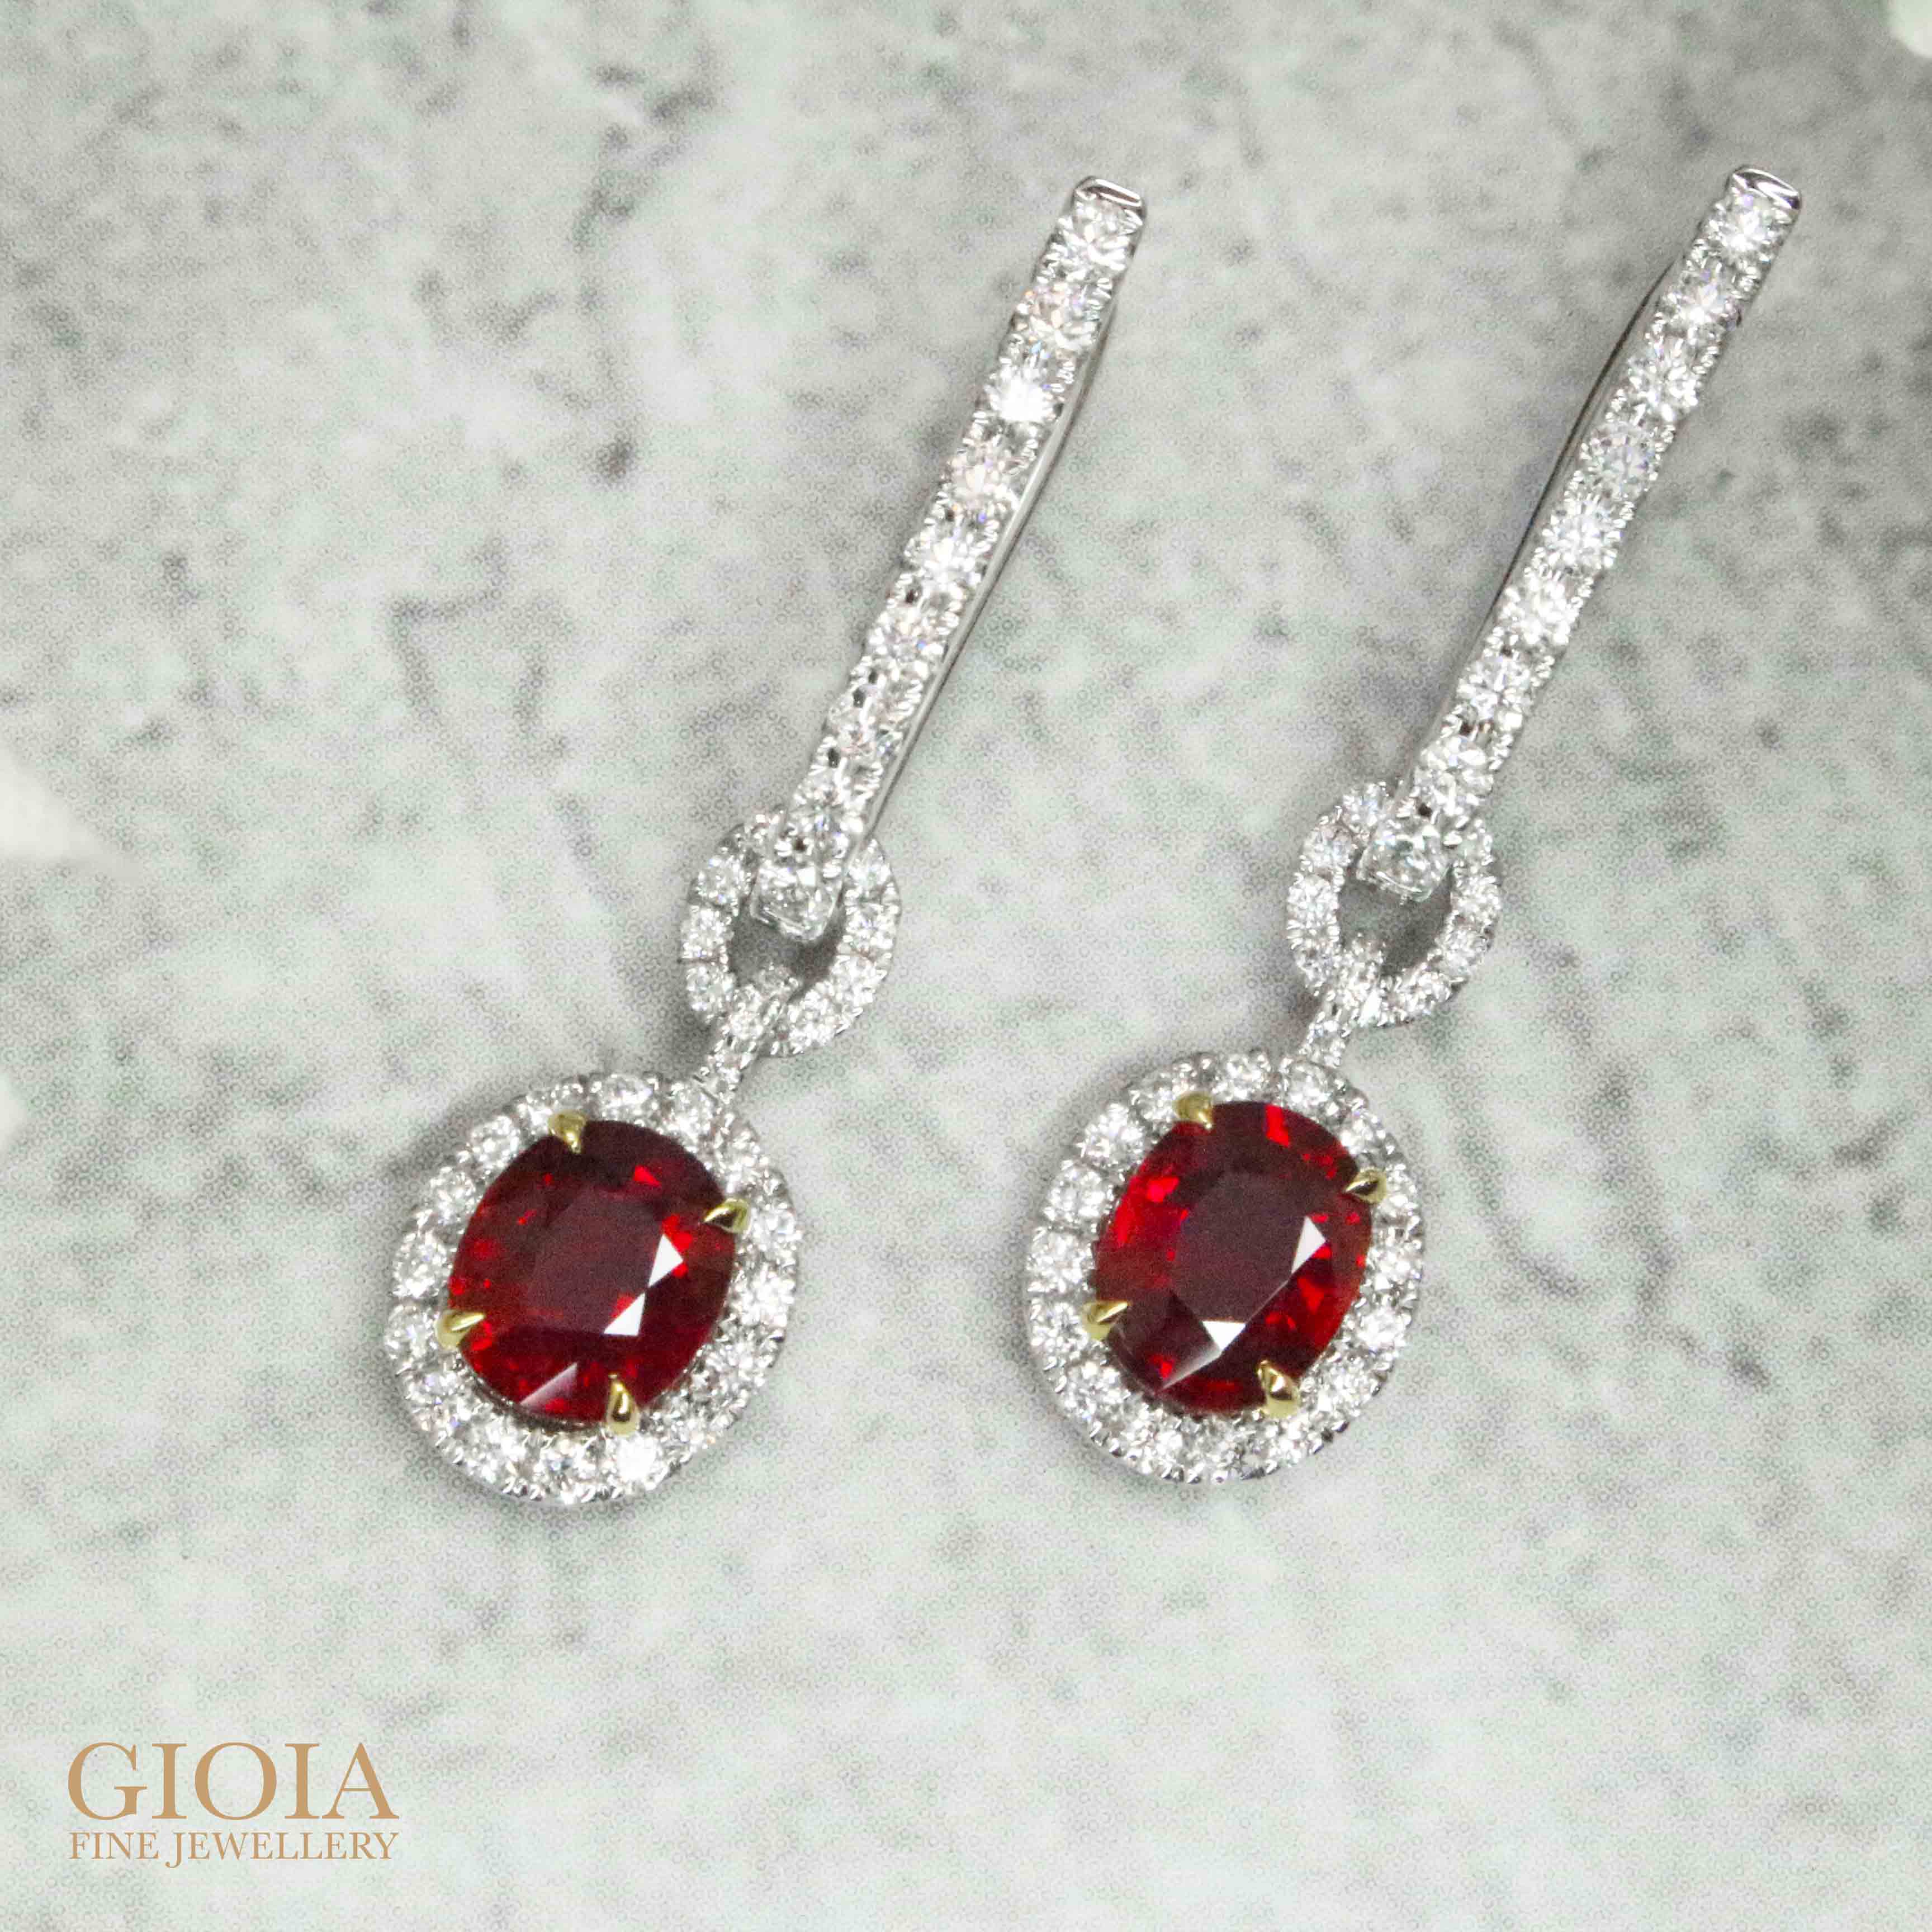 Gemstone Unheated Pigeon Blood Vivid Red Ruby Earring, customised fine jewellery | Local Singapore Private Jeweller in bespoke fine jewellery.